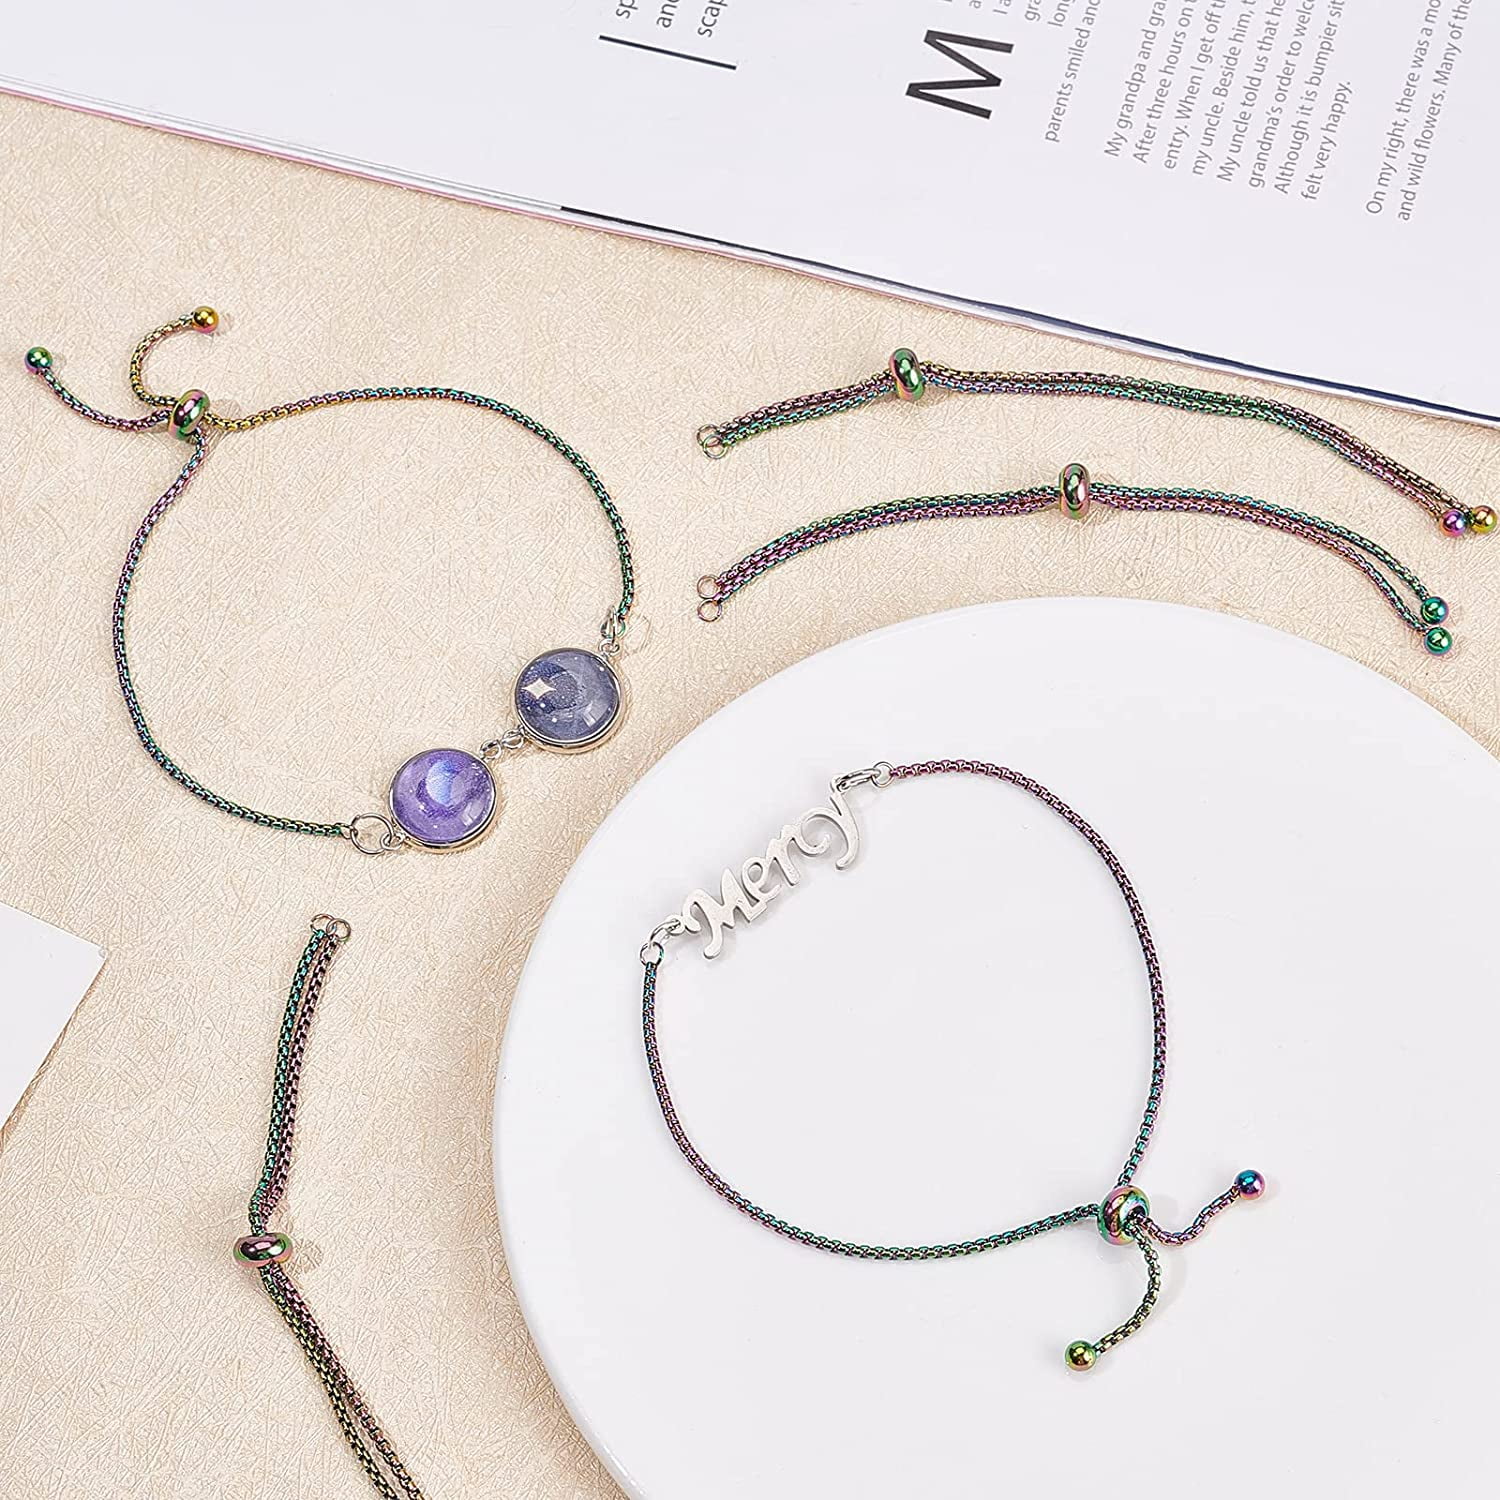 Kate Spade Full Circle Slider Bracelet | Kate spade jewelry bracelets,  Clothes design, Fashion design